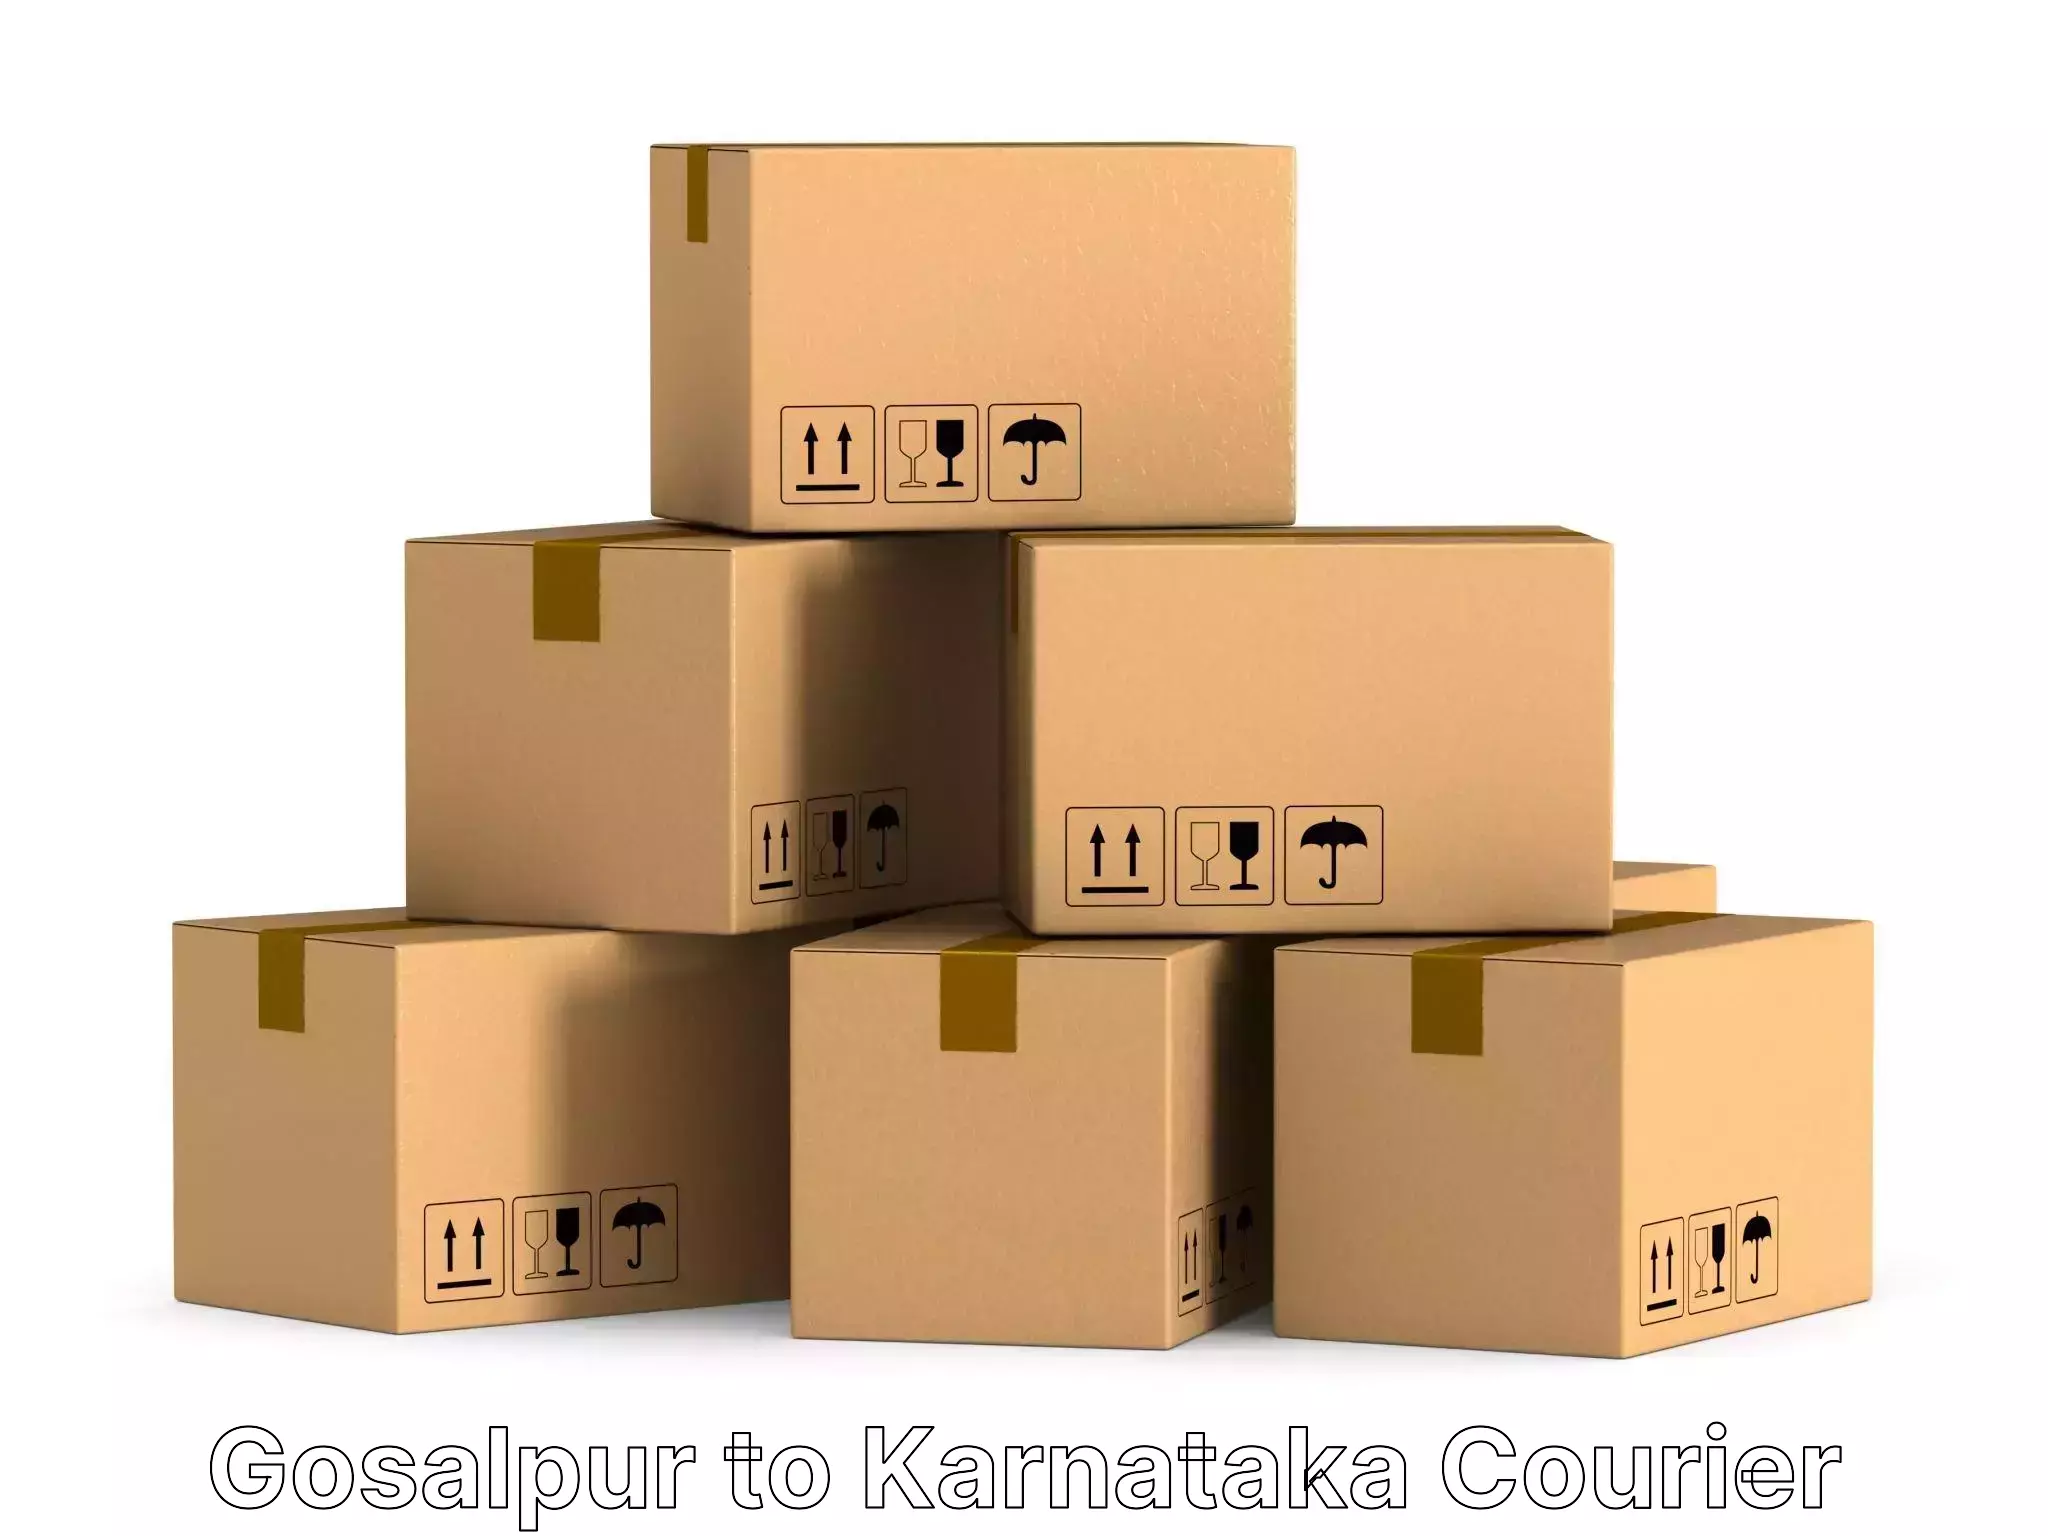 Cost-effective moving options Gosalpur to Karnataka